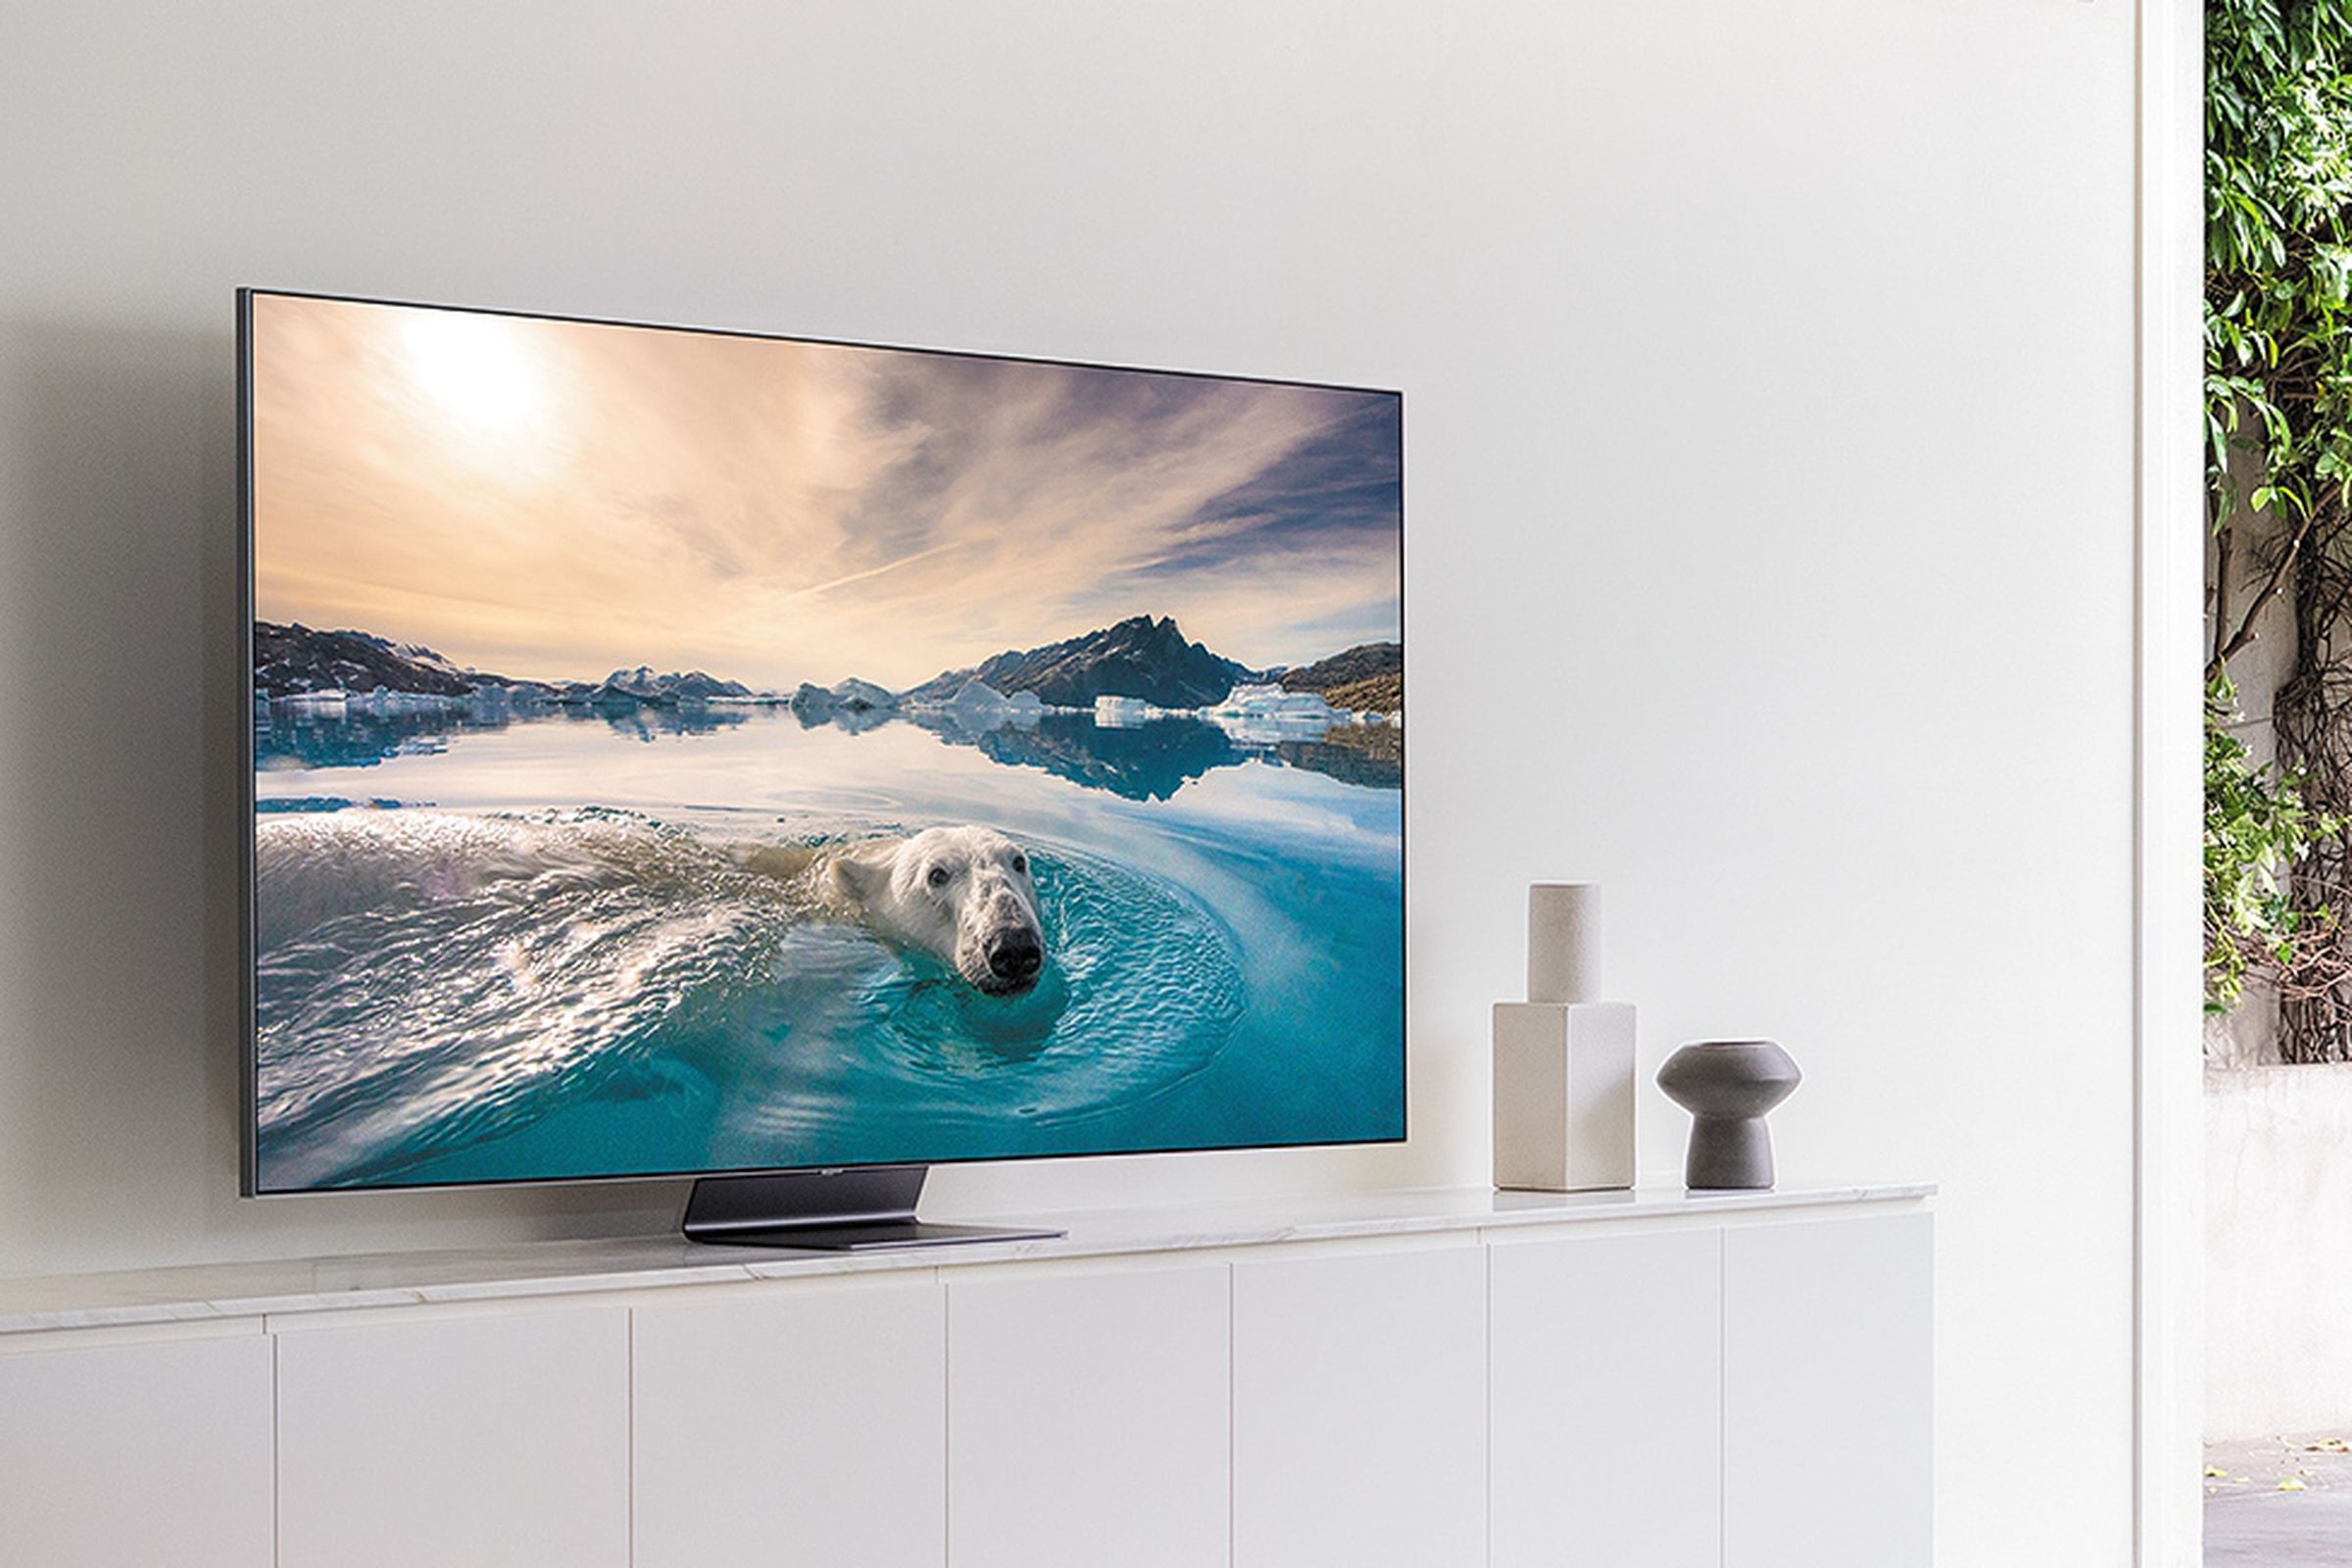 Samsung’s TV shipments rose sharply last quarter.